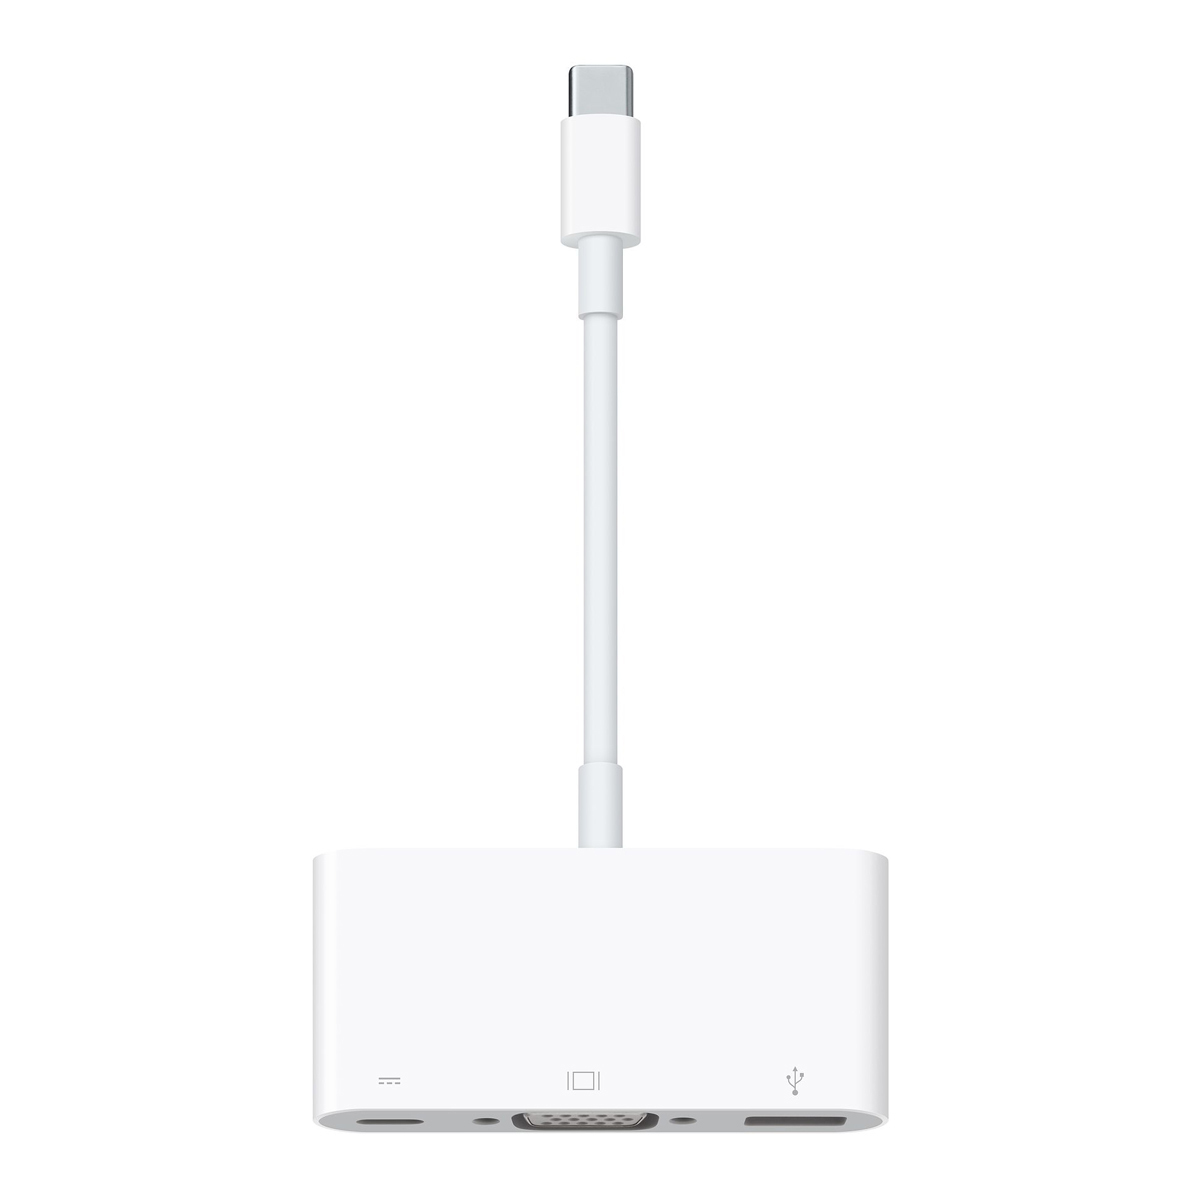 Adaptador Multipuerto Apple MJ1L2AM/A / Blanco / USB / USB Tipo C / VGA